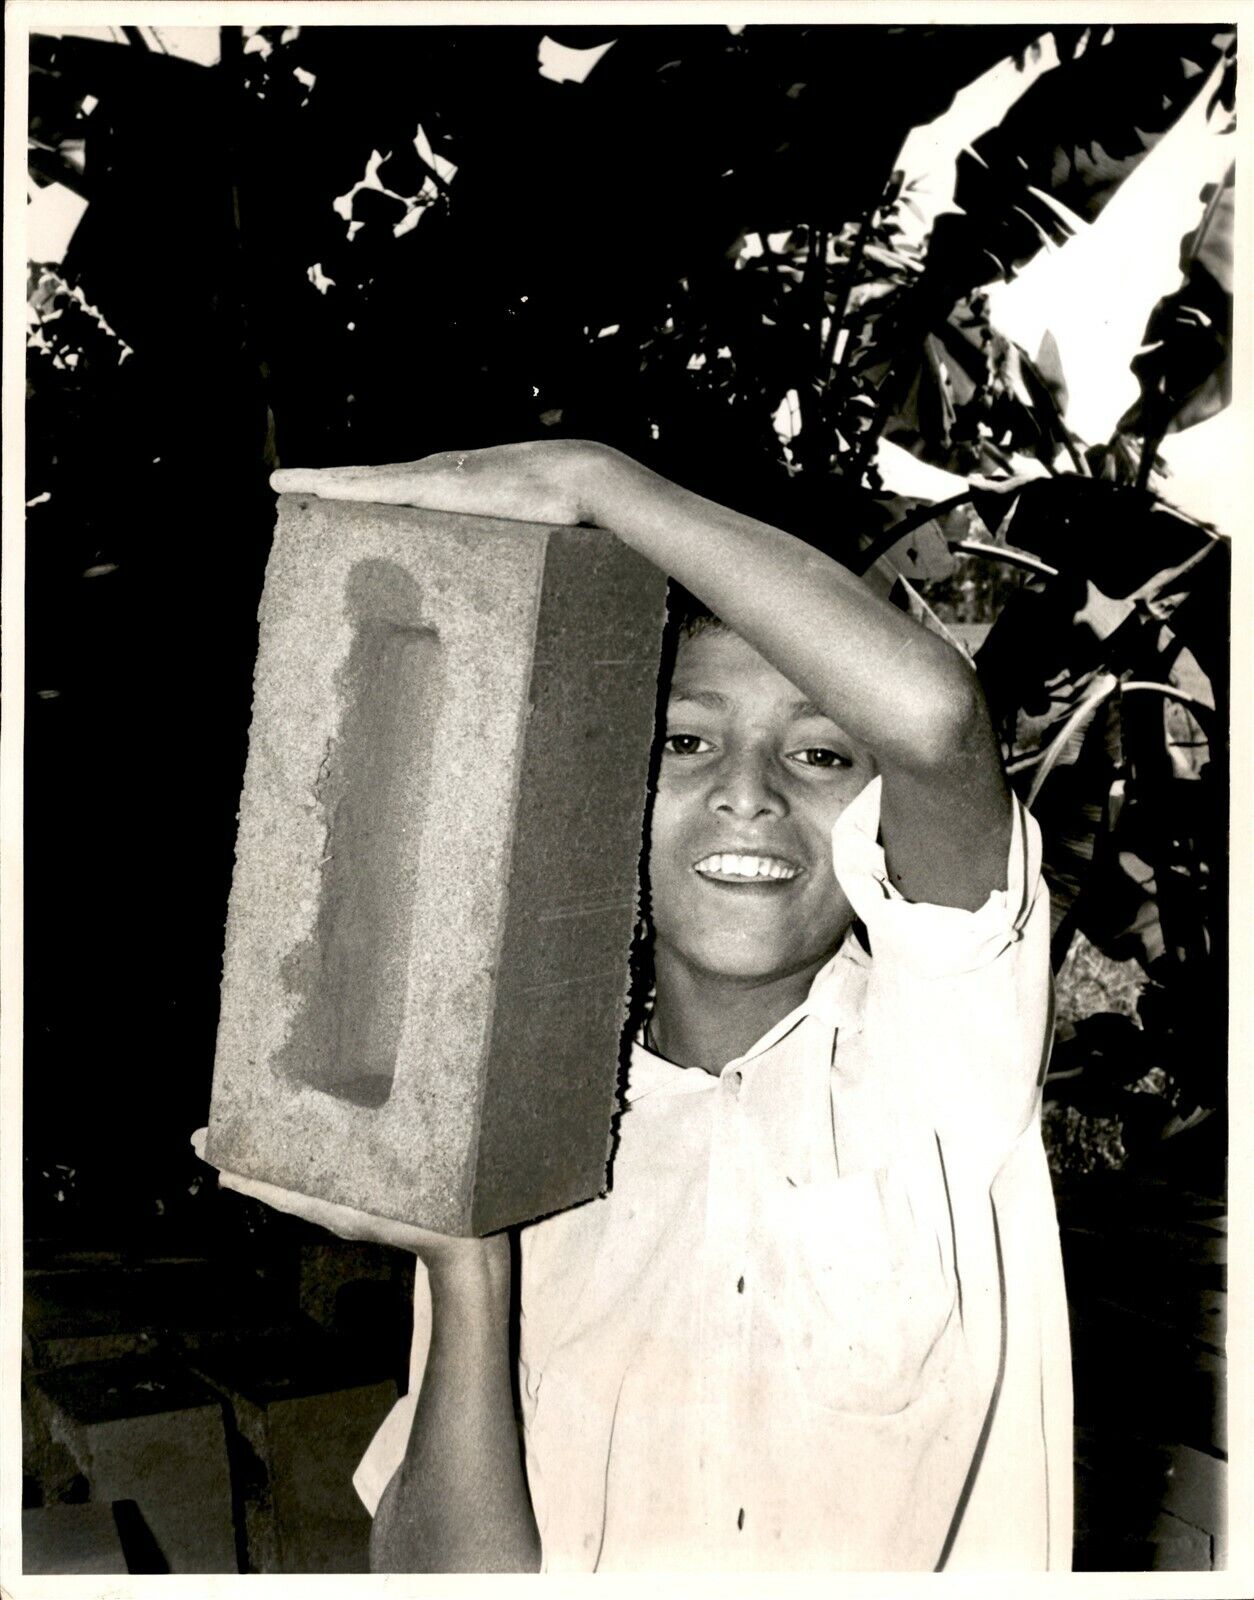 LG904 1972 Orig UPI Photo A BIG BARGAIN Adorable Young Boy CARE Humanitarian Aid